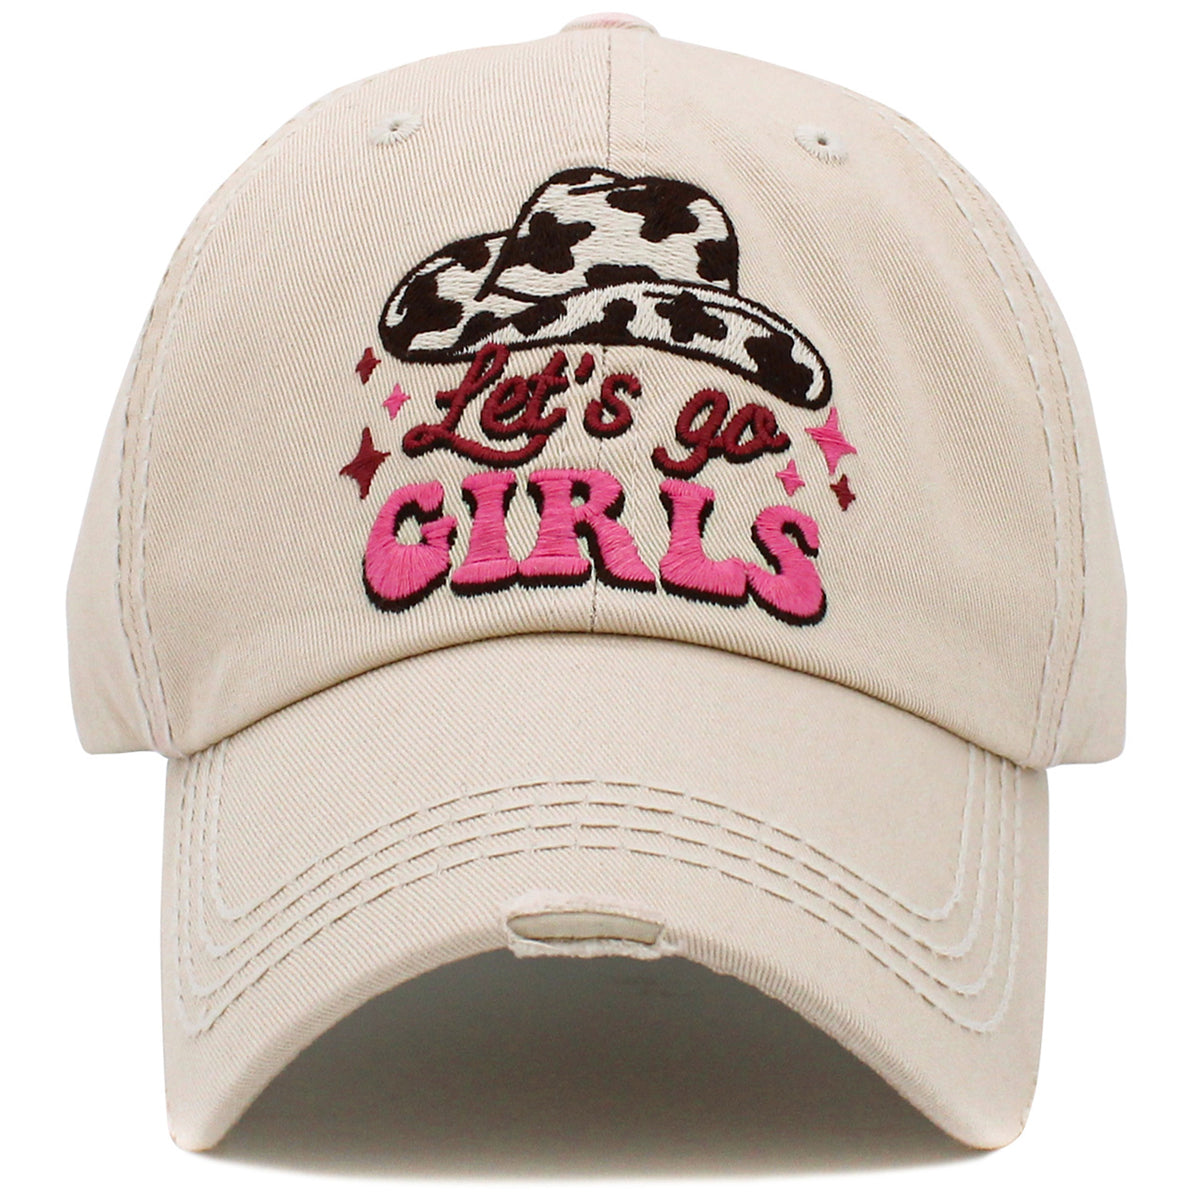 1509 - Let's Go Girls Hat - Stone